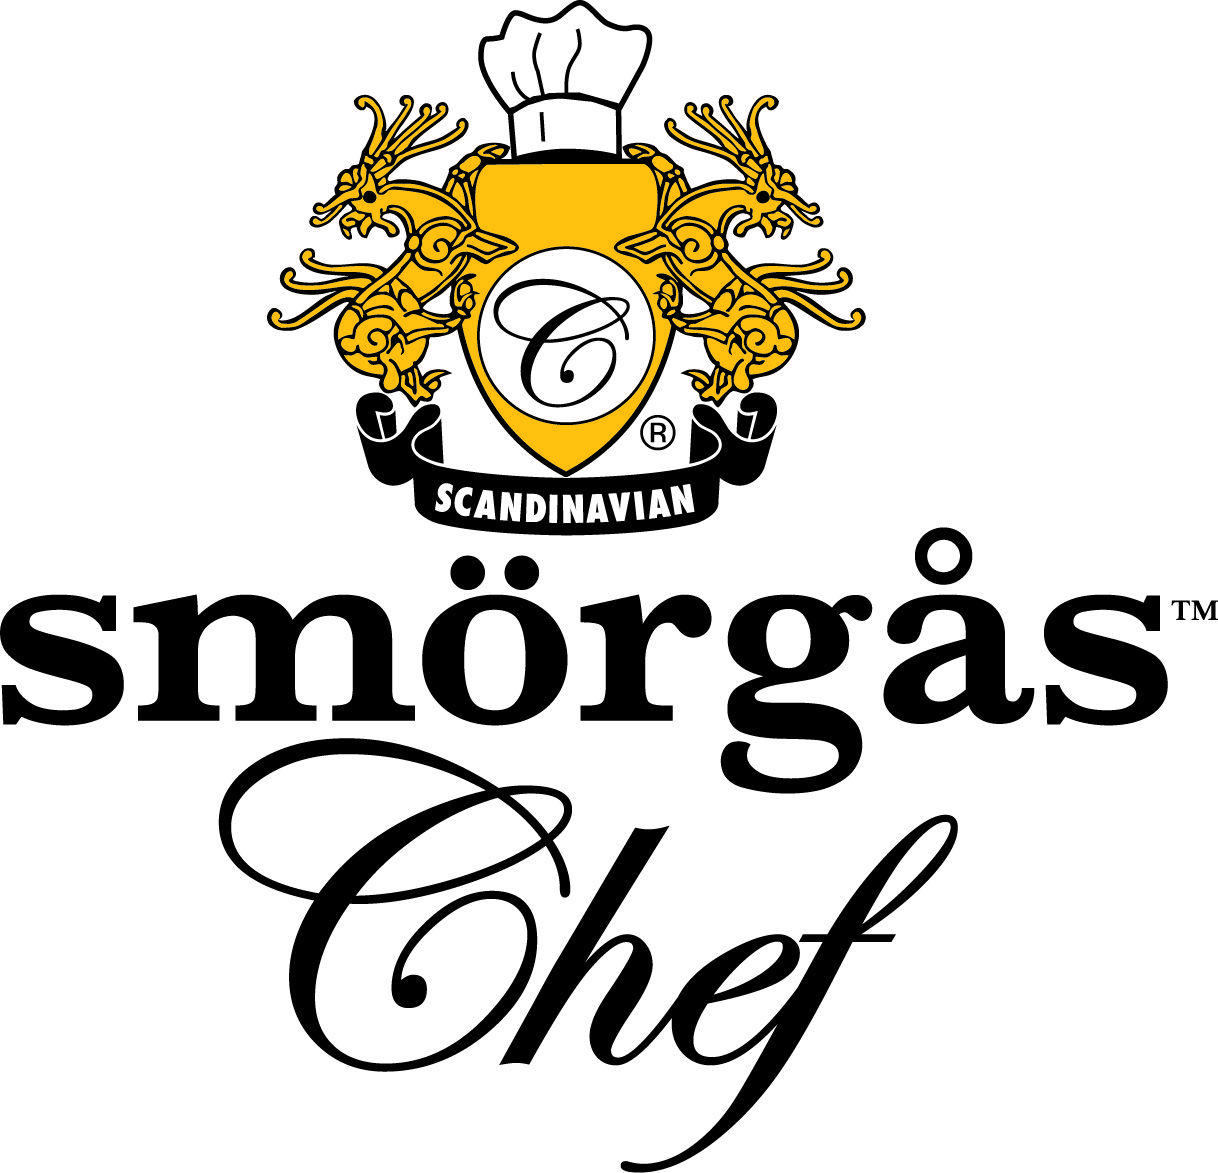 Swedish Restaurants Logo - Smörgås chef